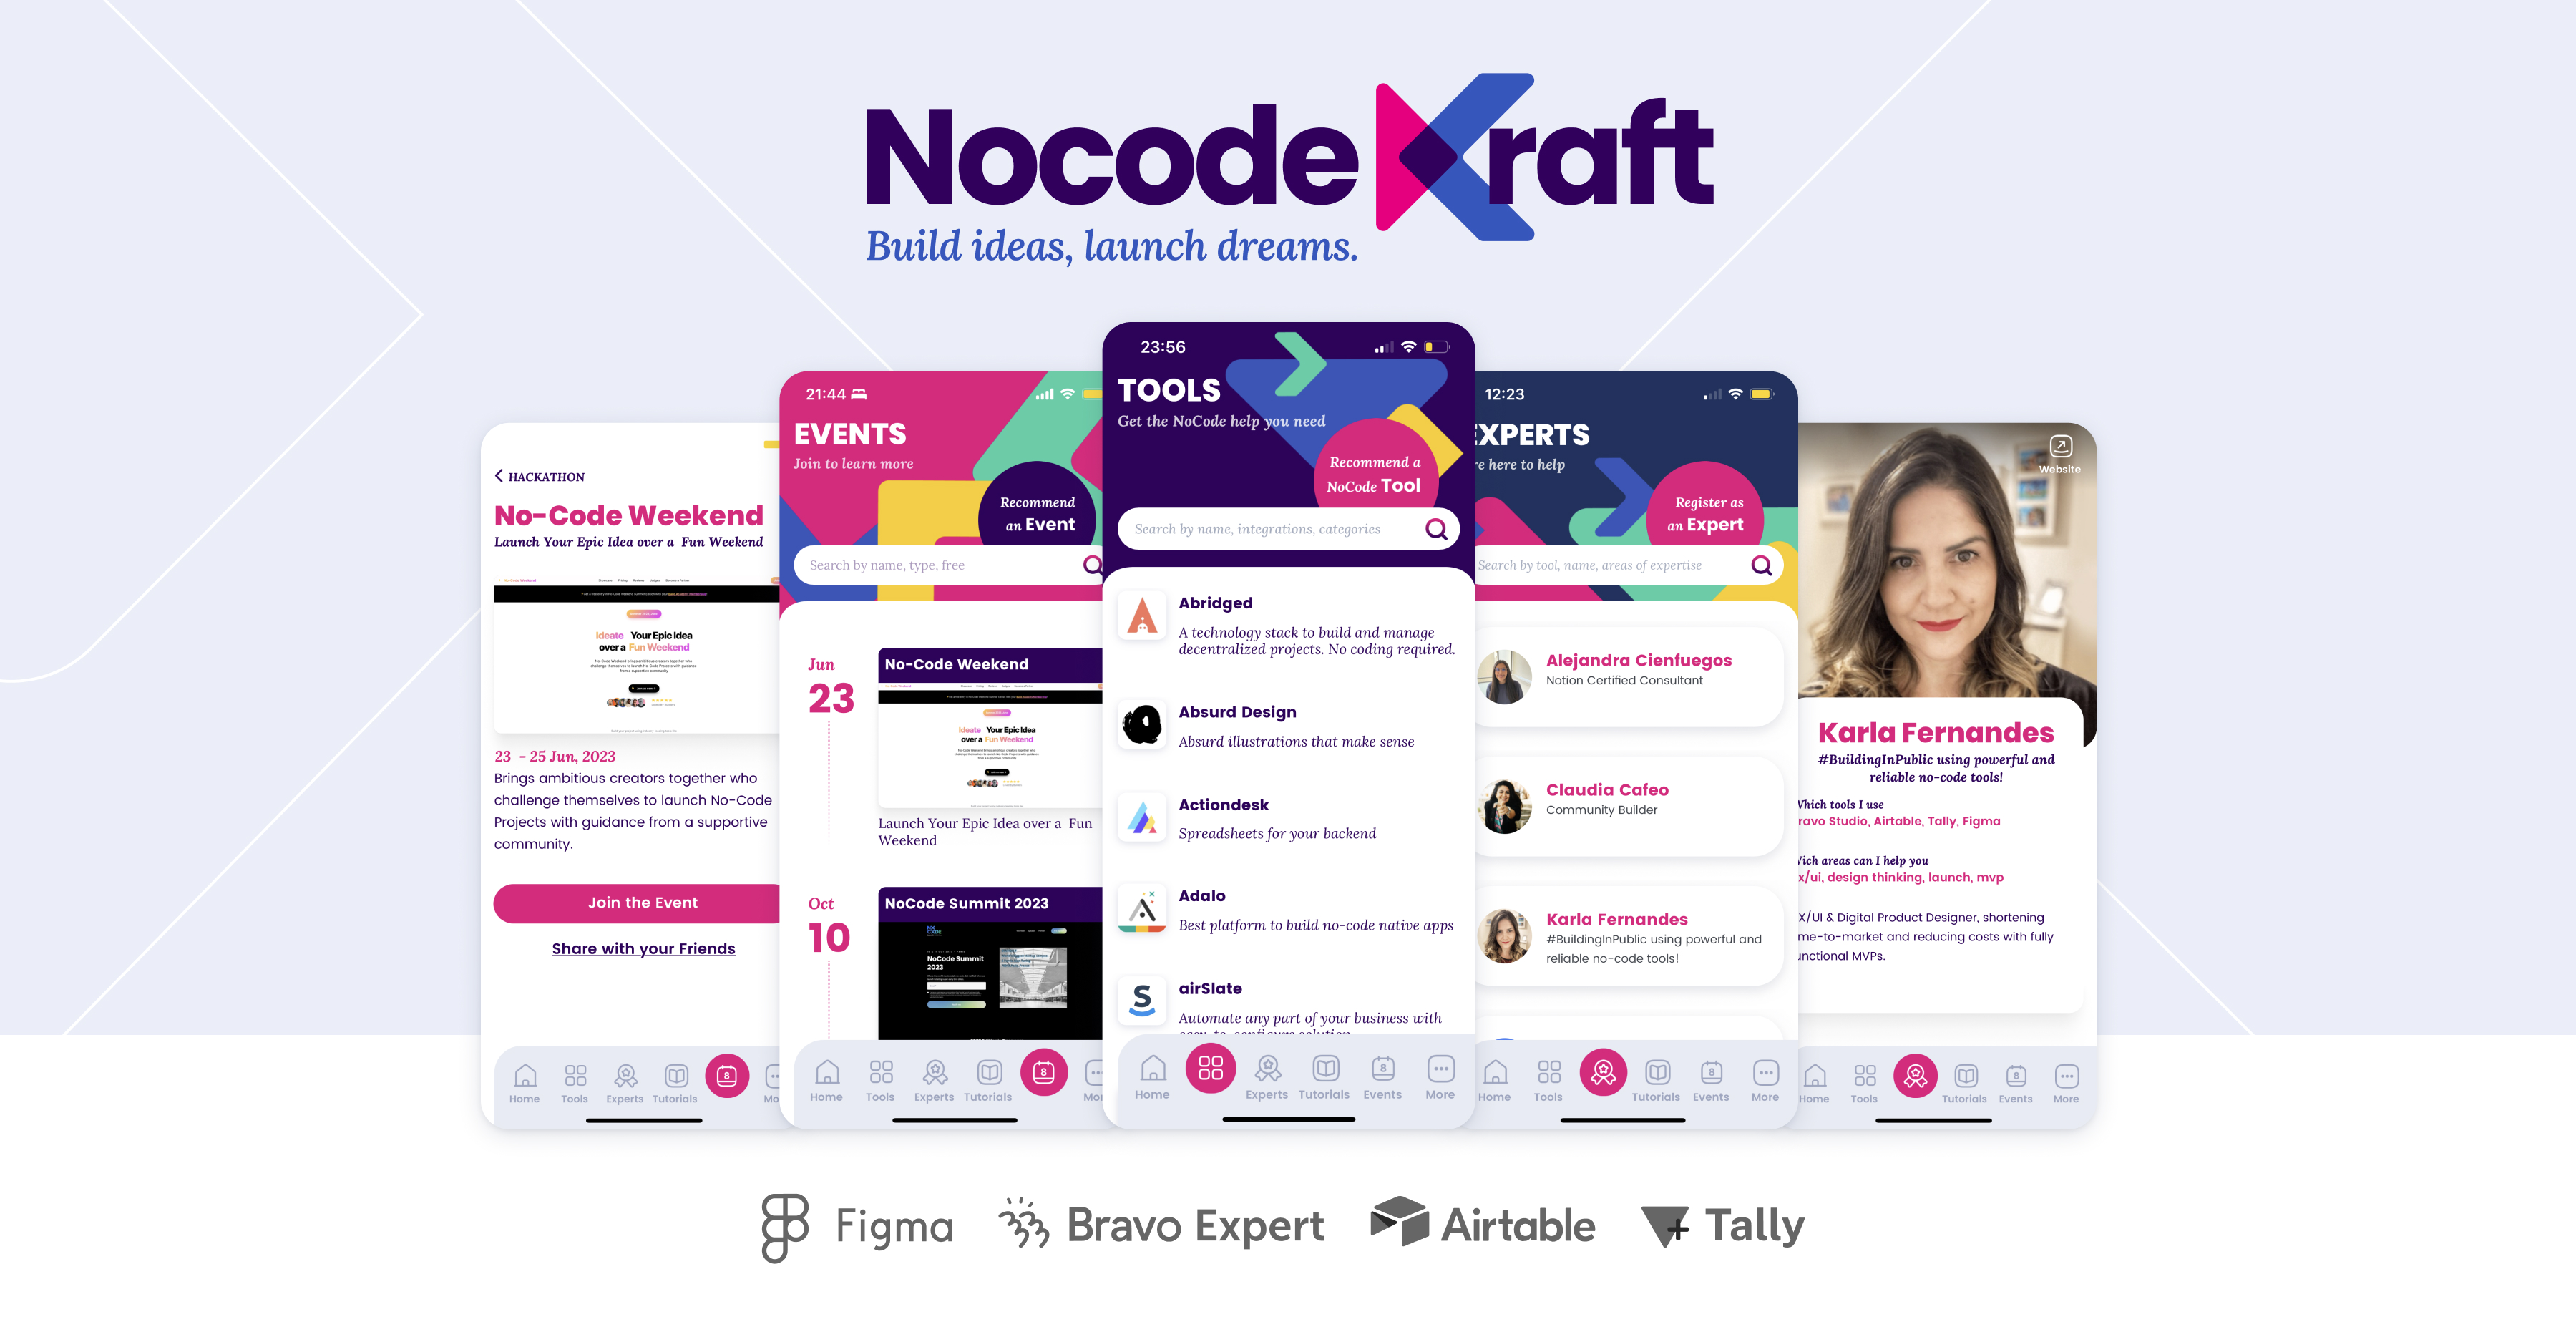 Nocode Kraft: A 21-Day Design Thinking Journey to Launch a No-Code Platform